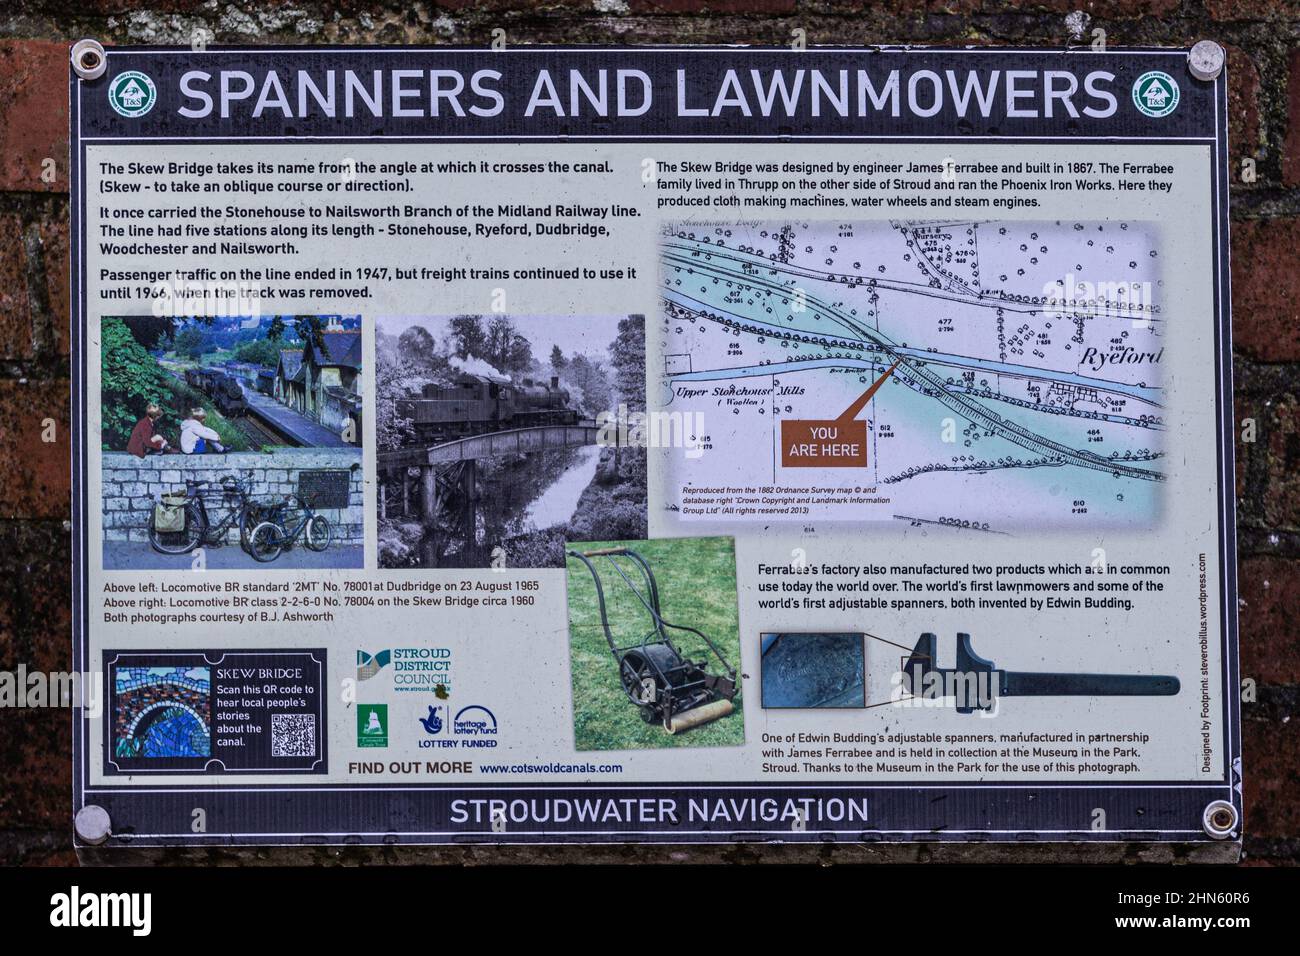 Spanners and Lawnmowers information board, Skew Bridge, Stroud, England Stock Photo